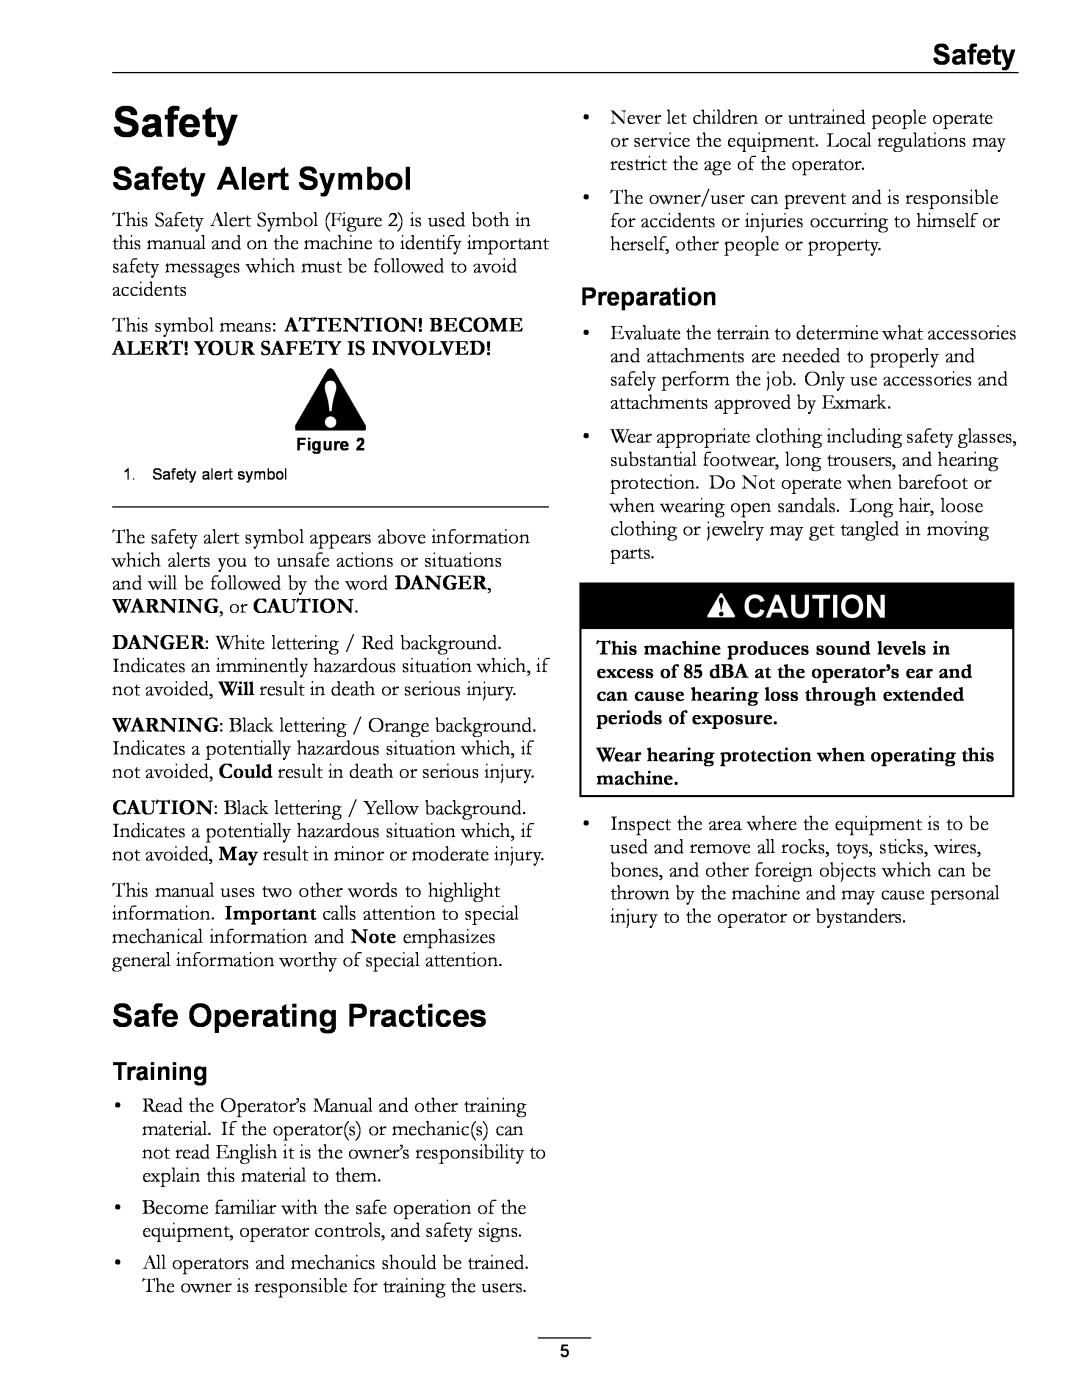 Exmark 720000 & Higher manual Safety Alert Symbol, Safe Operating Practices, Training, Preparation 